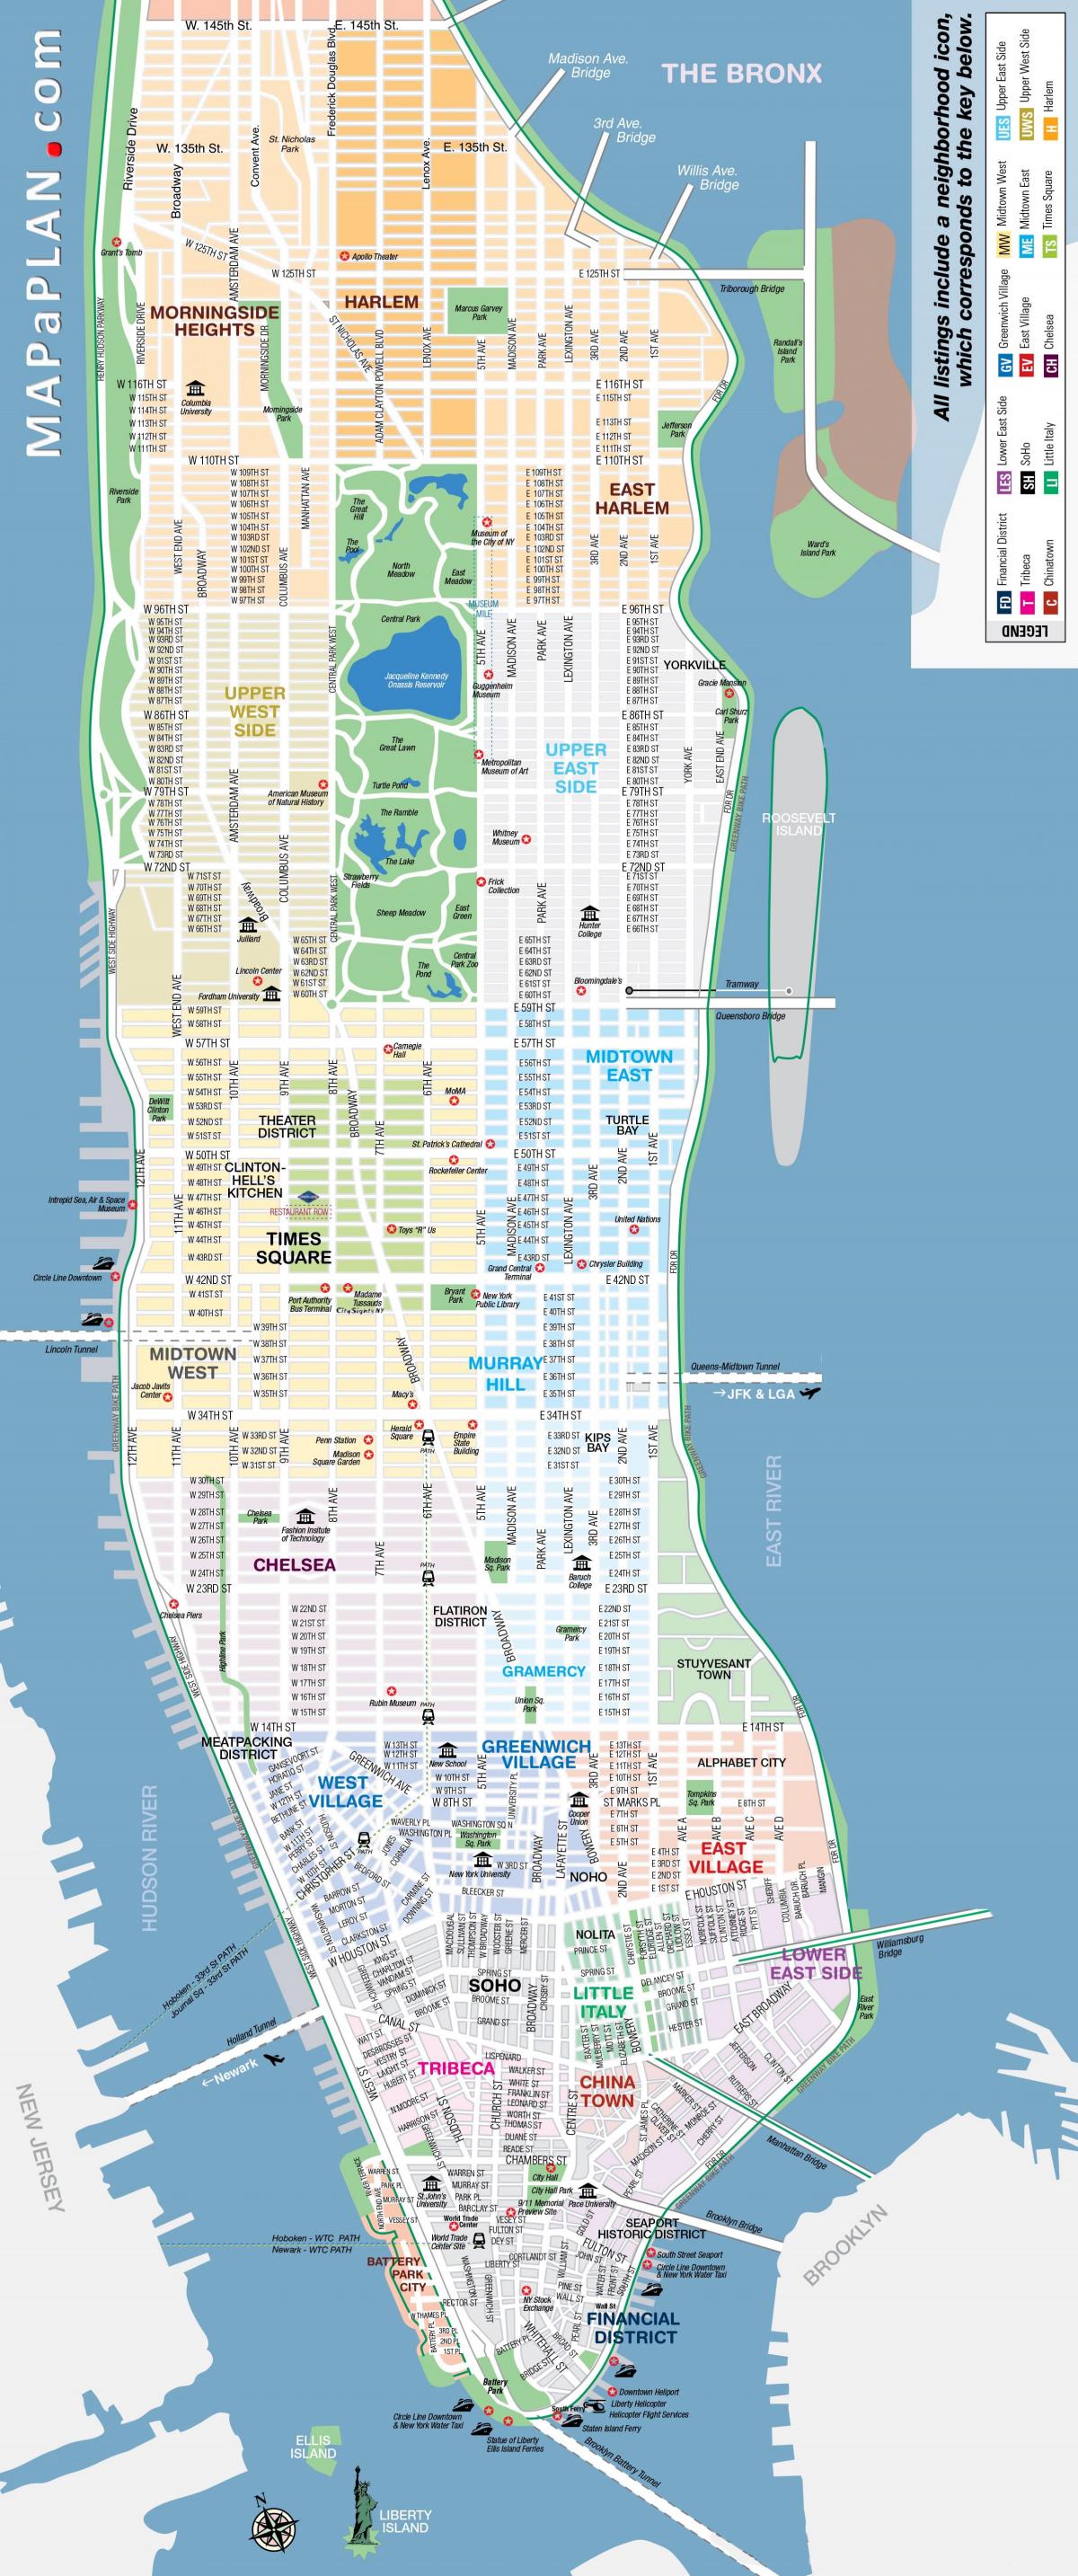 lliure imprimir mapa de Manhattan de nova york